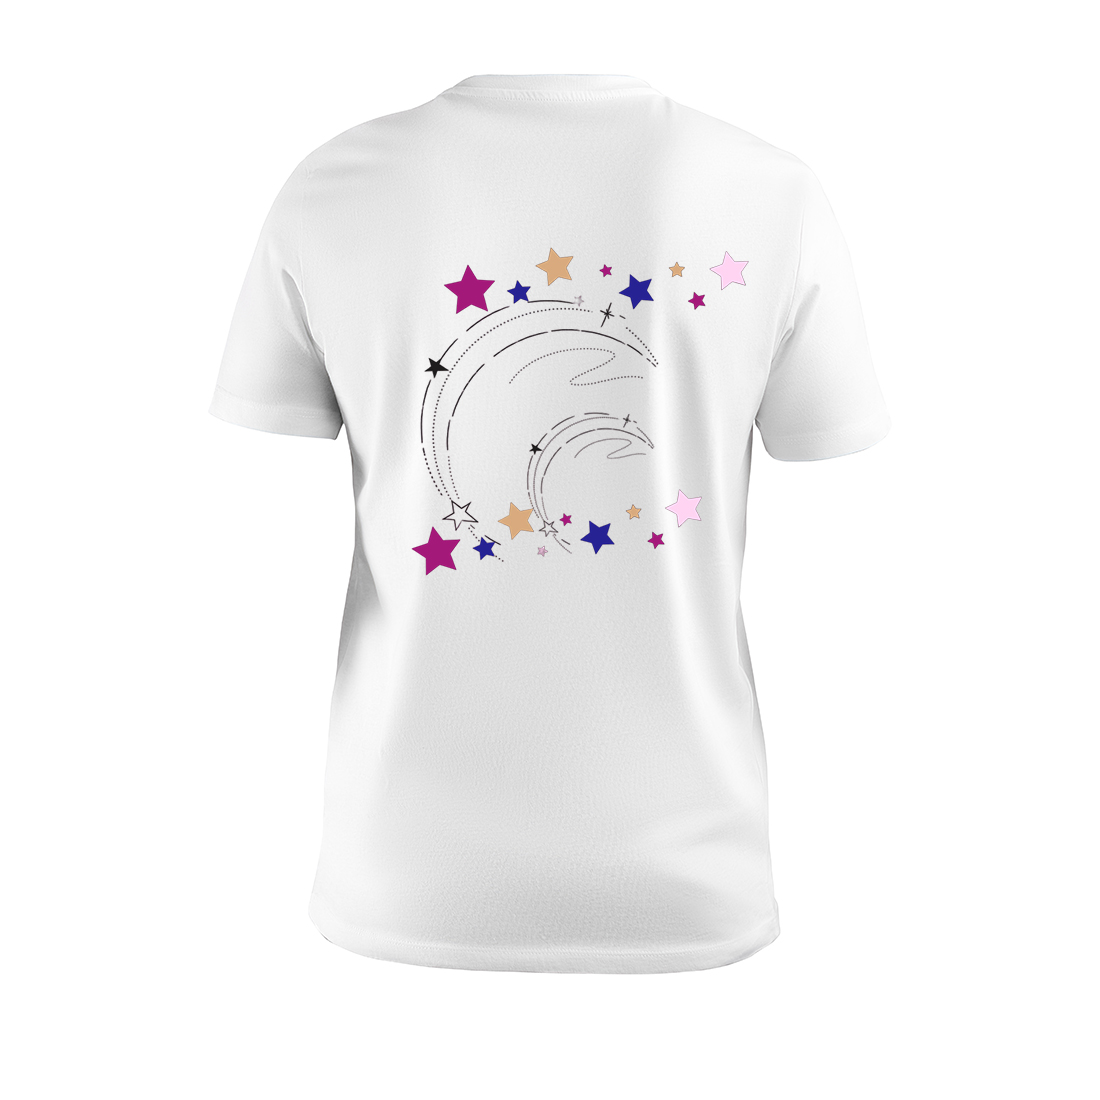 ti shirt design for printing stars back 959